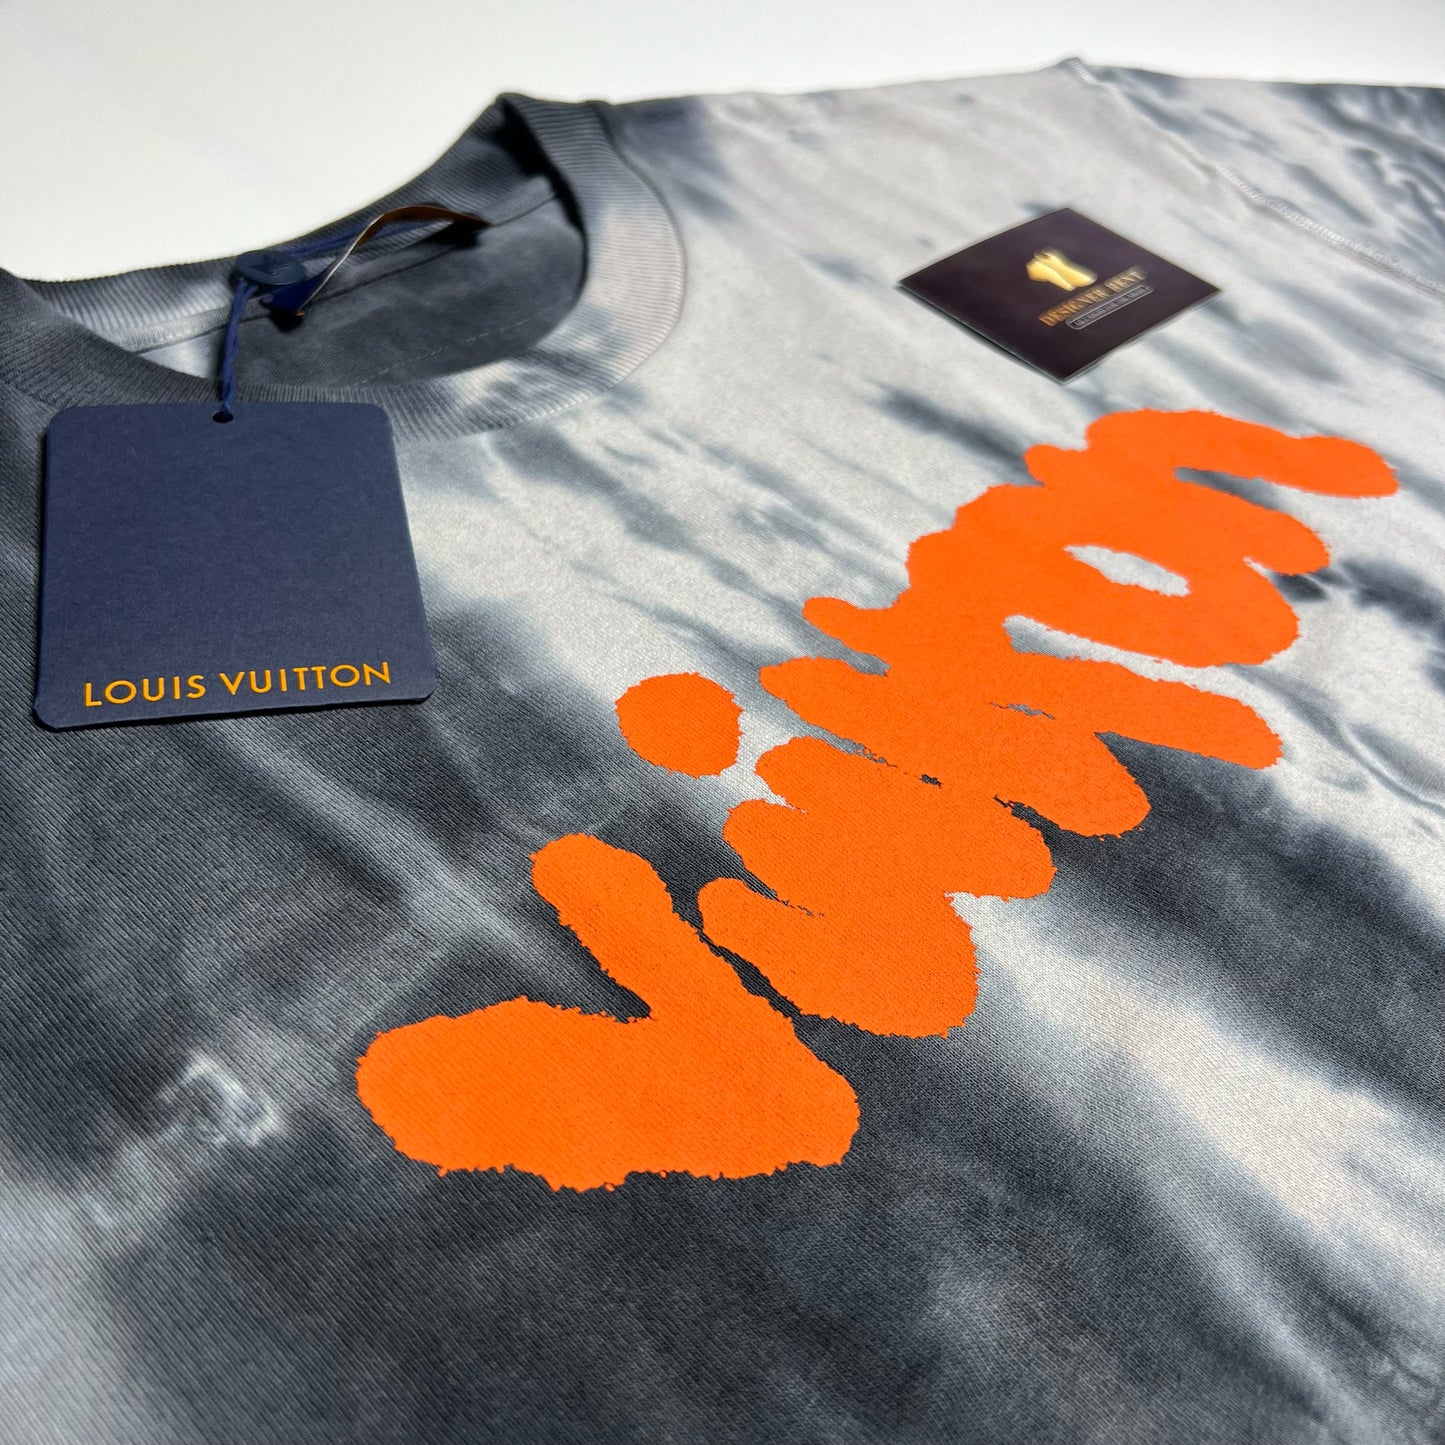 HOT Louis Vuitton Blue Tie Dye Luxury Brand T-Shirt And Pants